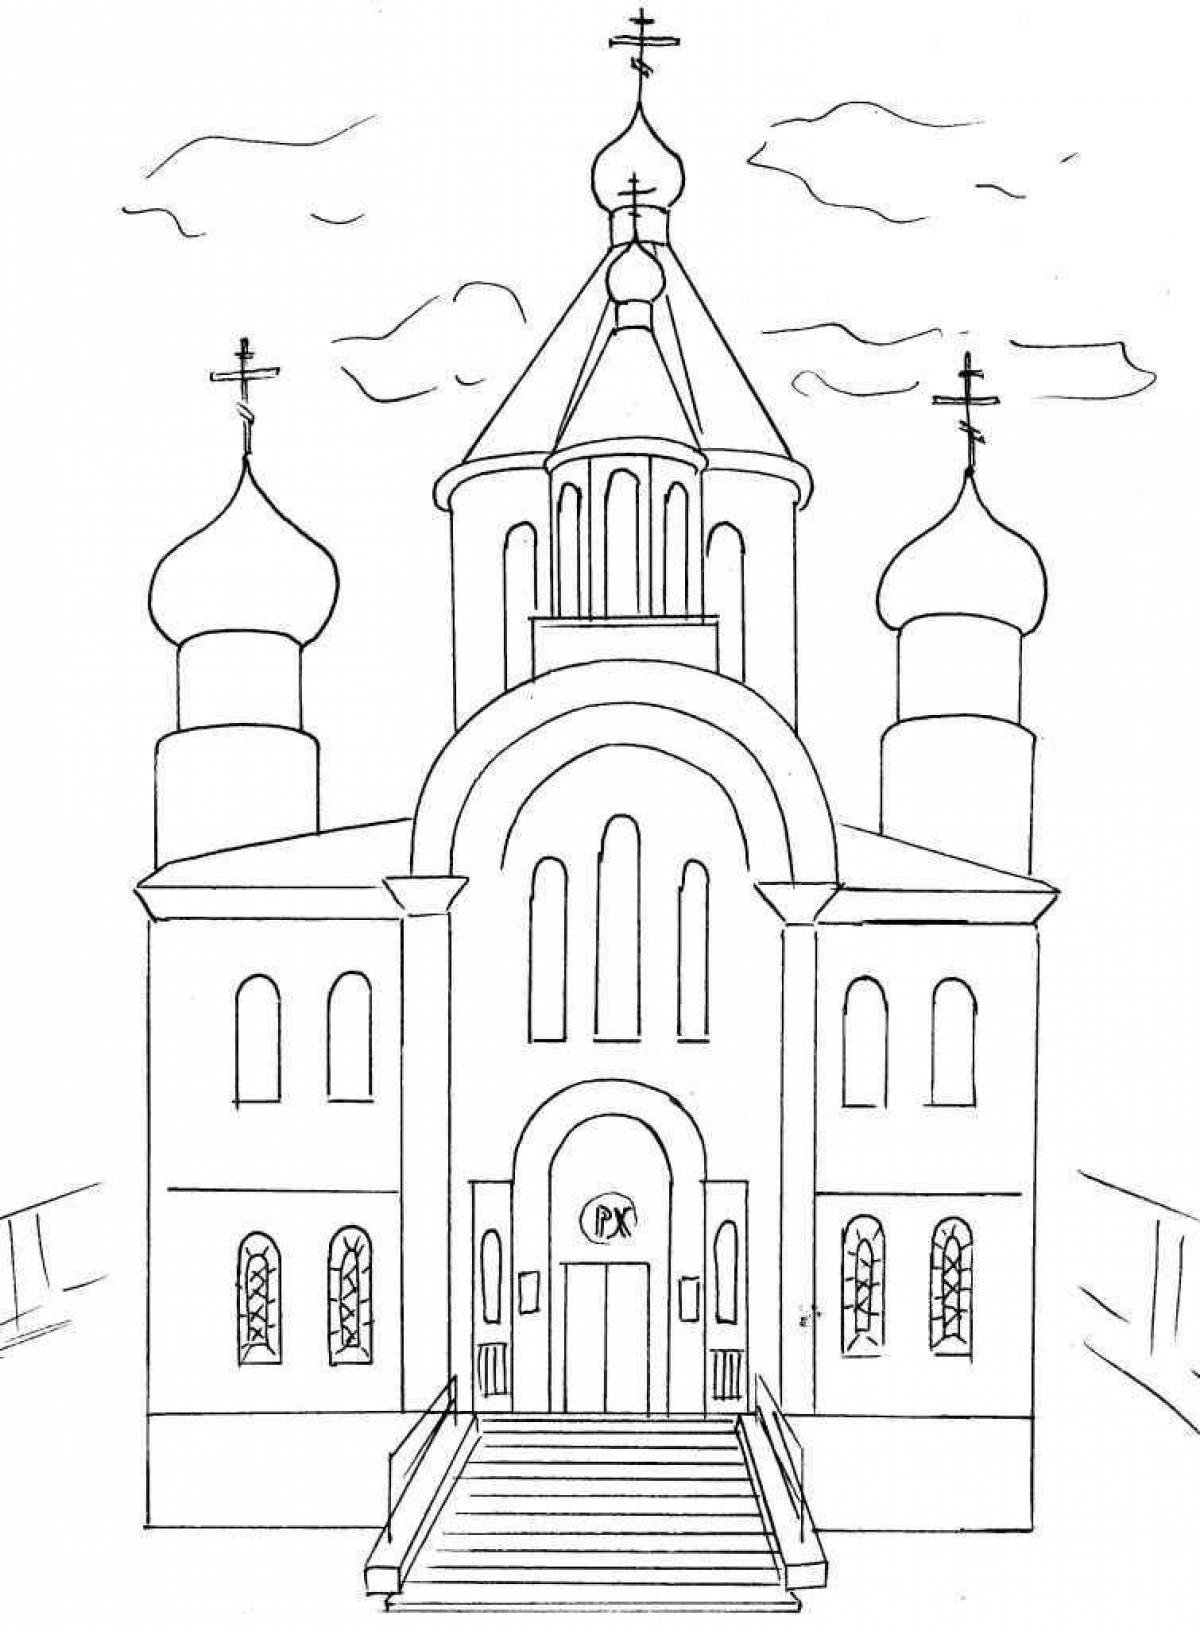 Joyful church coloring book for kids